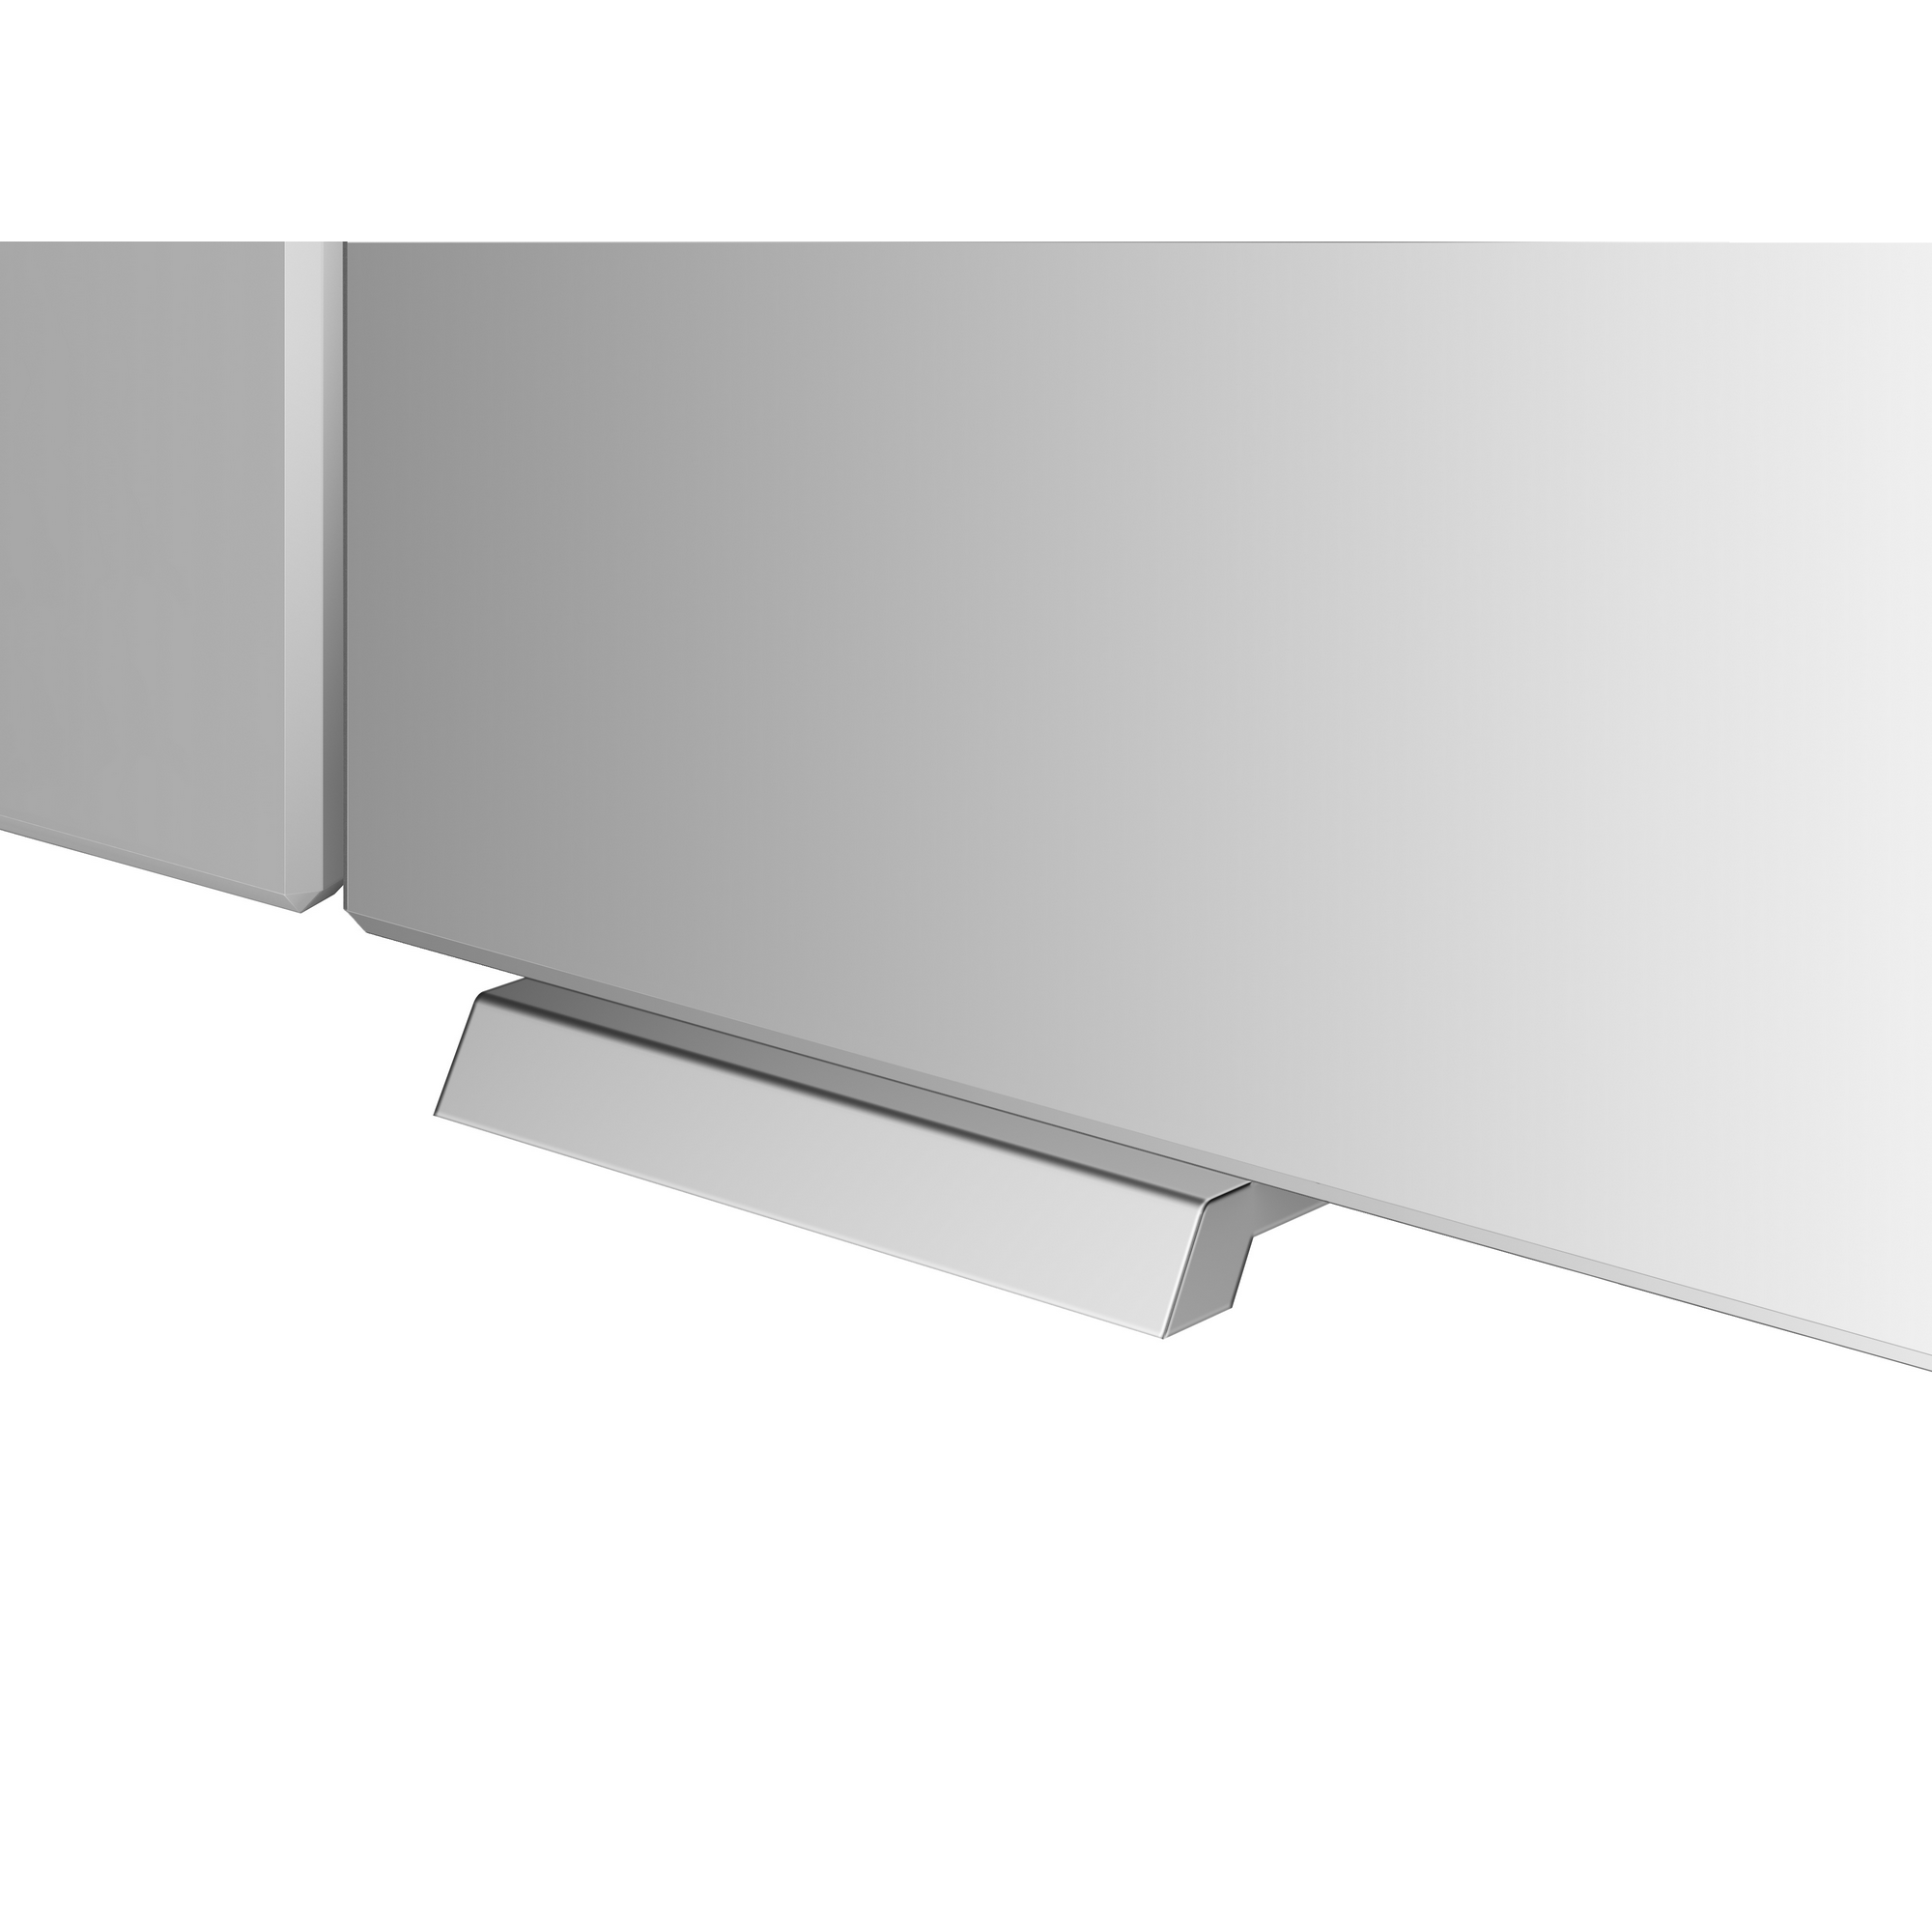 LED-Spiegelschrank 'KHX' weiß 120 x 74 x 14,2 cm + product picture